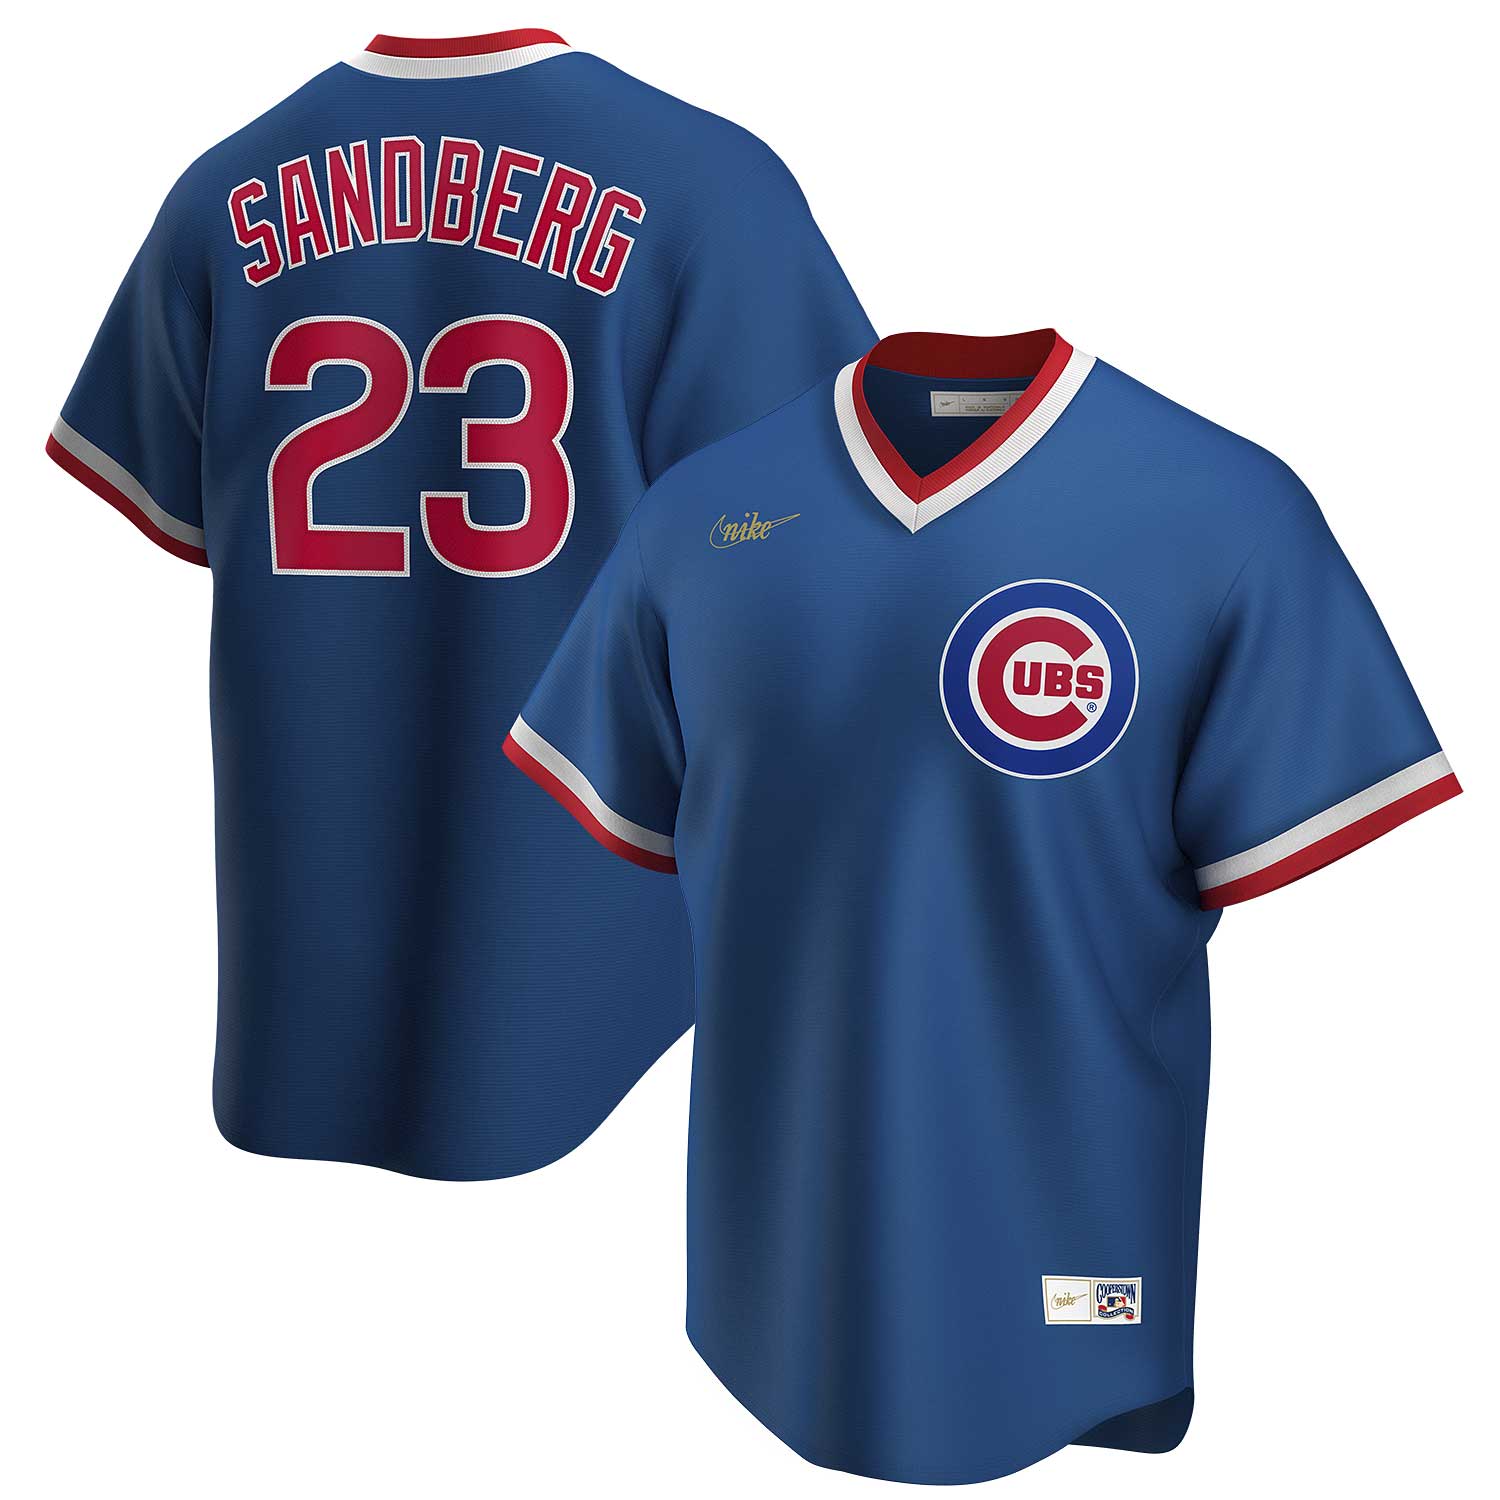 Ryne Sandberg 1984 Chicago Cubs Throwback Jersey – Best Sports Jerseys